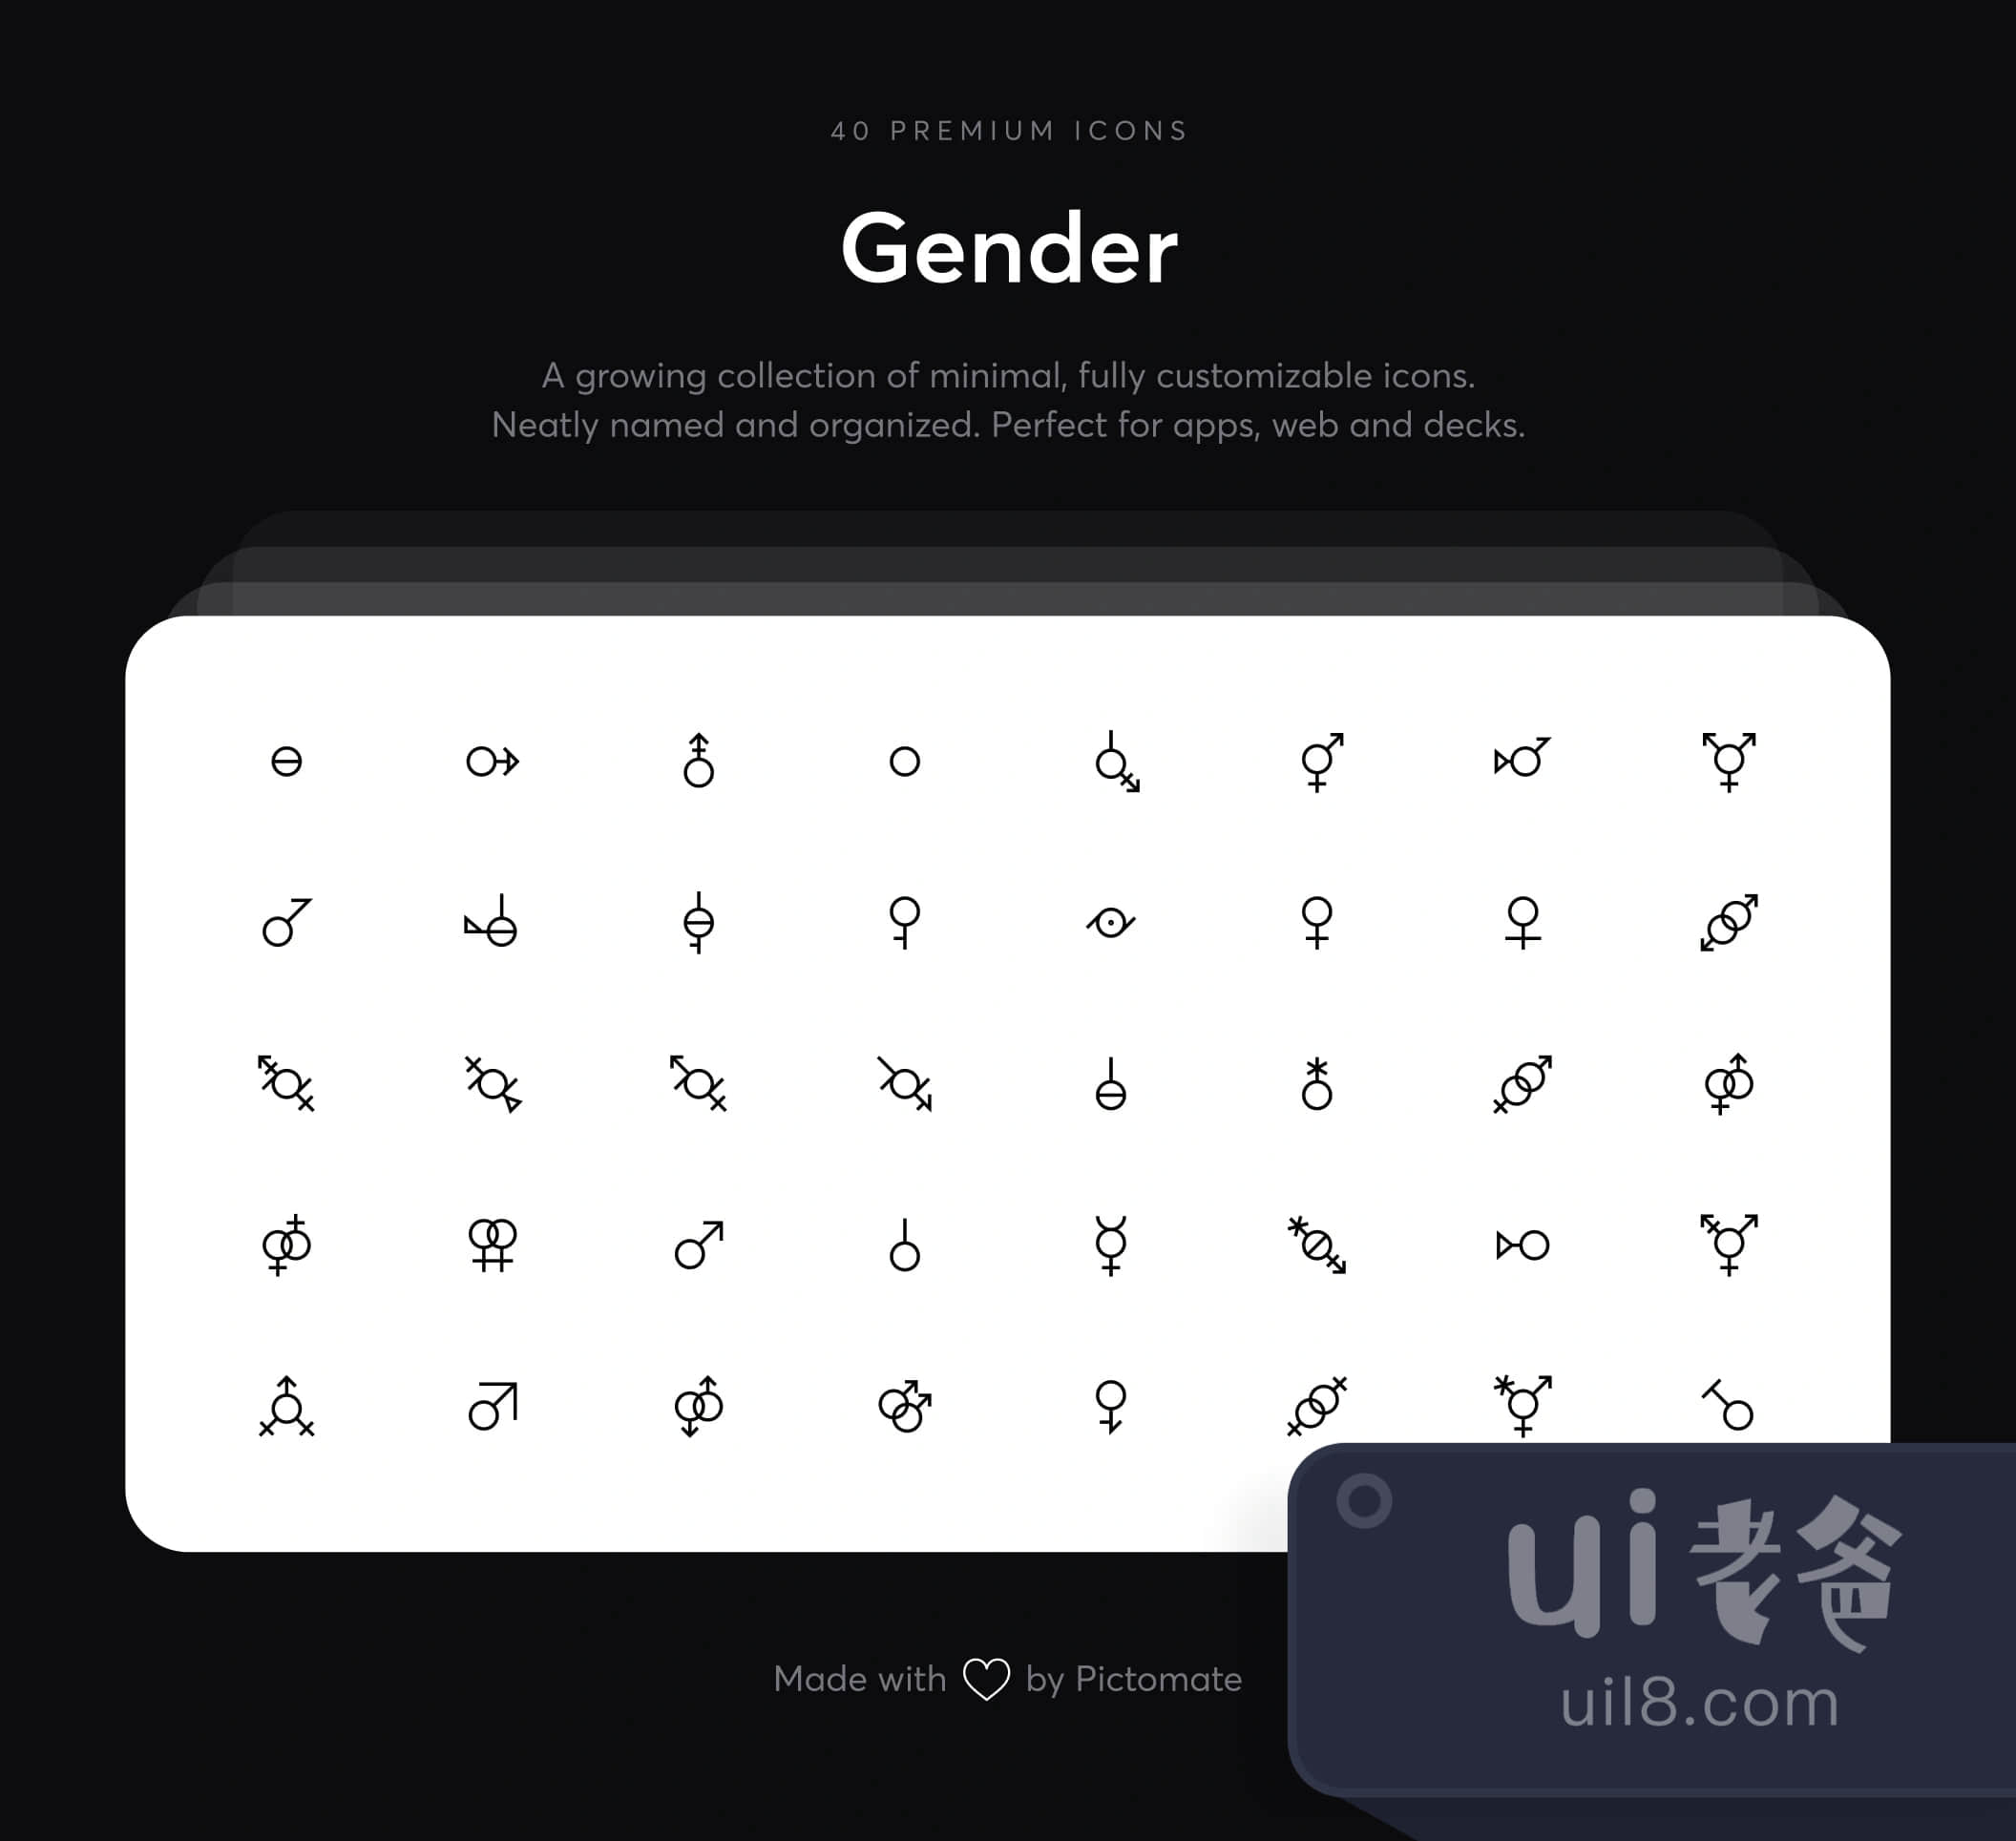 性别 - 高级图标 (Gender - Premium Icons)插图